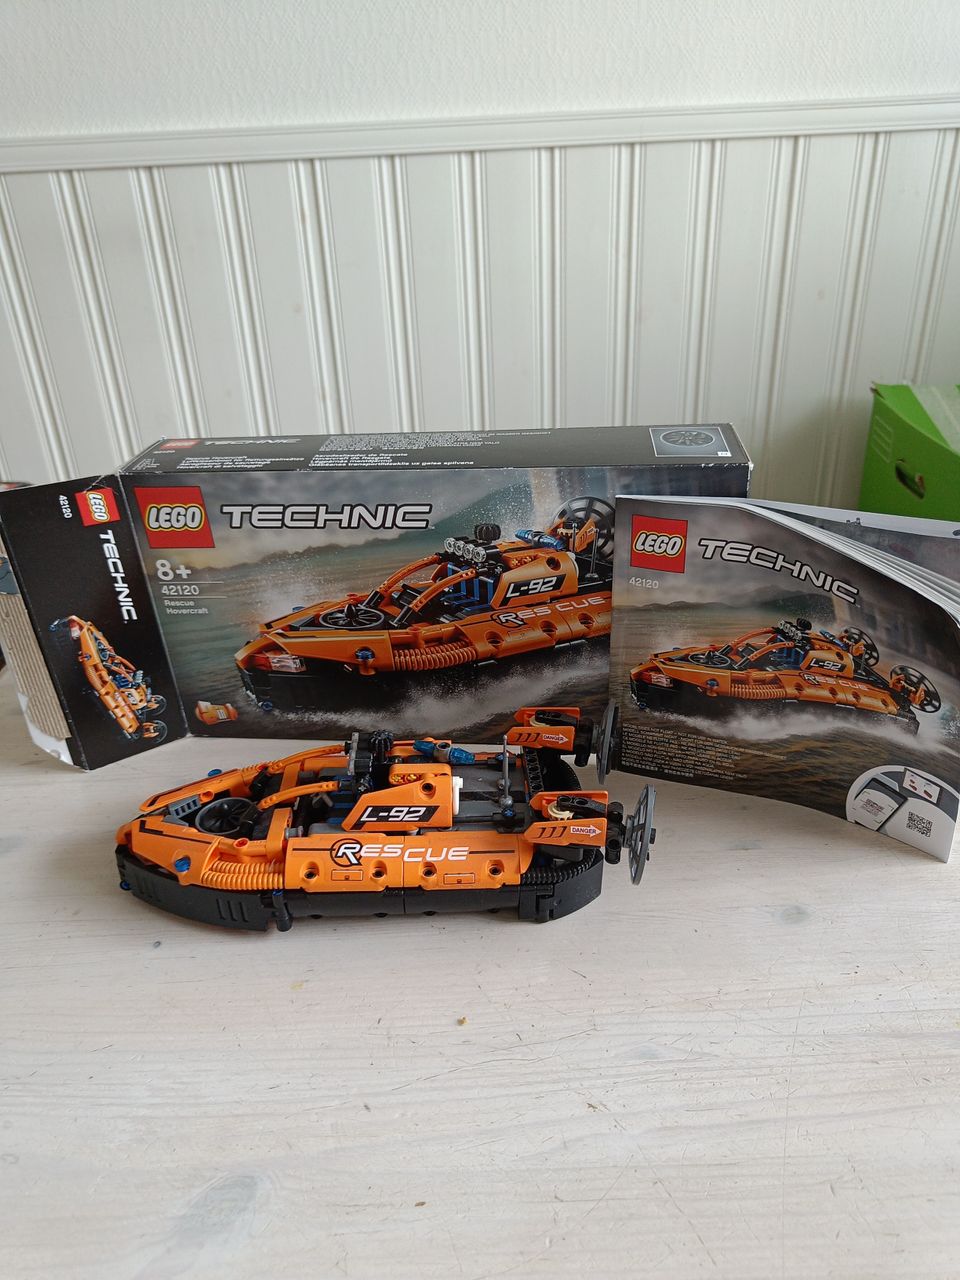 Lego Technic Rescue hovercraft